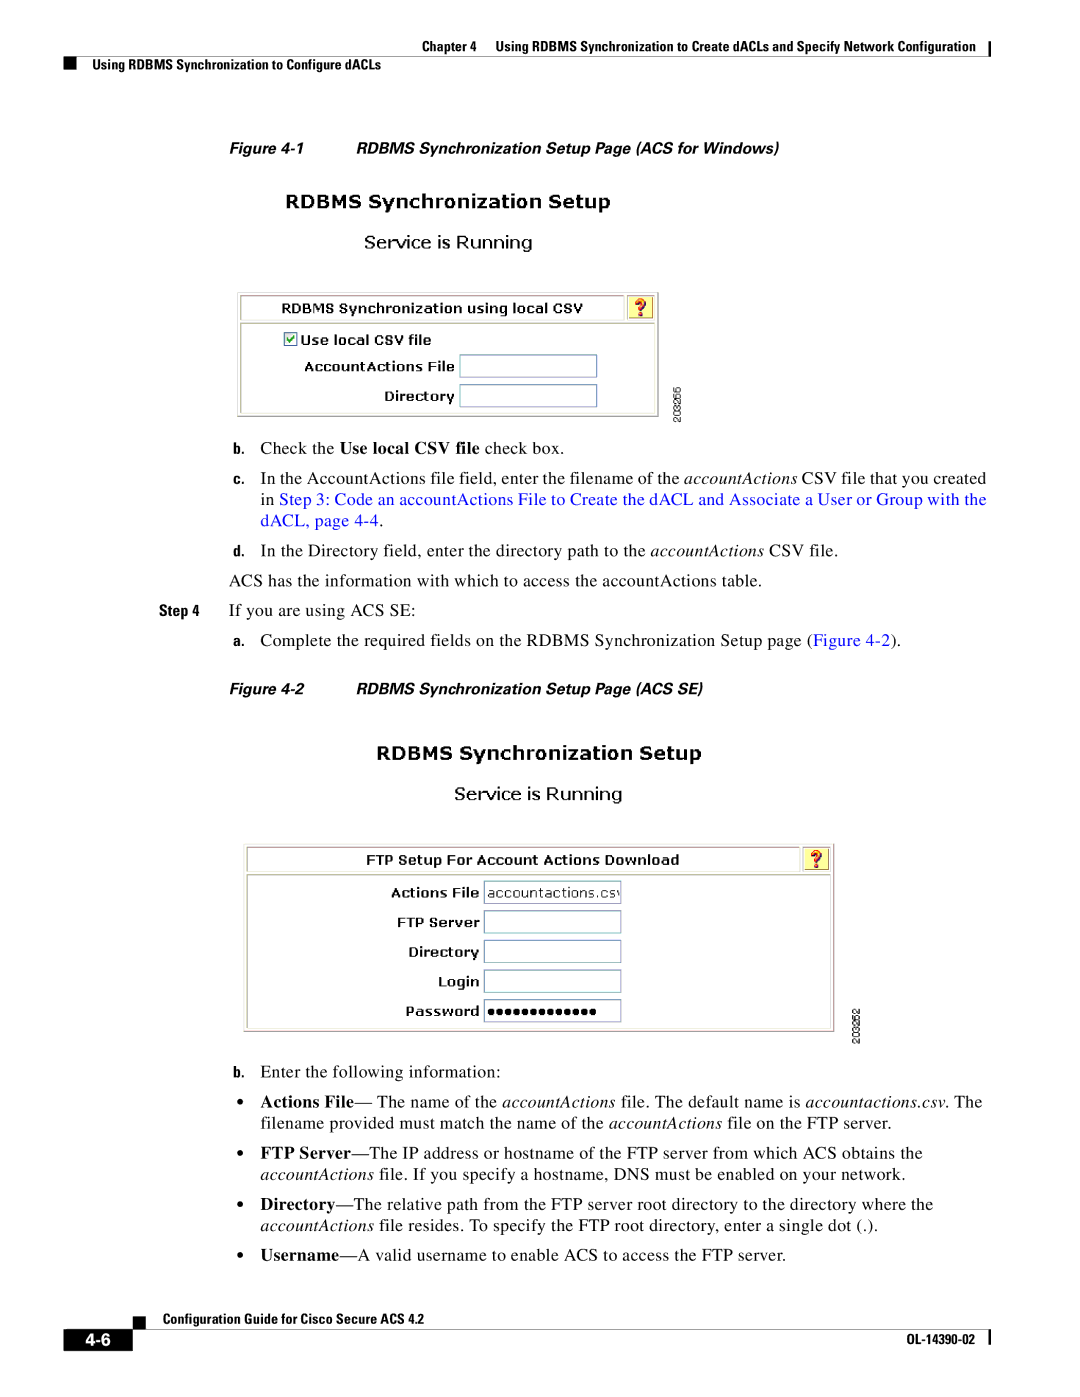 Cisco Systems 4.2 manual Rdbms Synchronization Setup Page ACS for Windows 